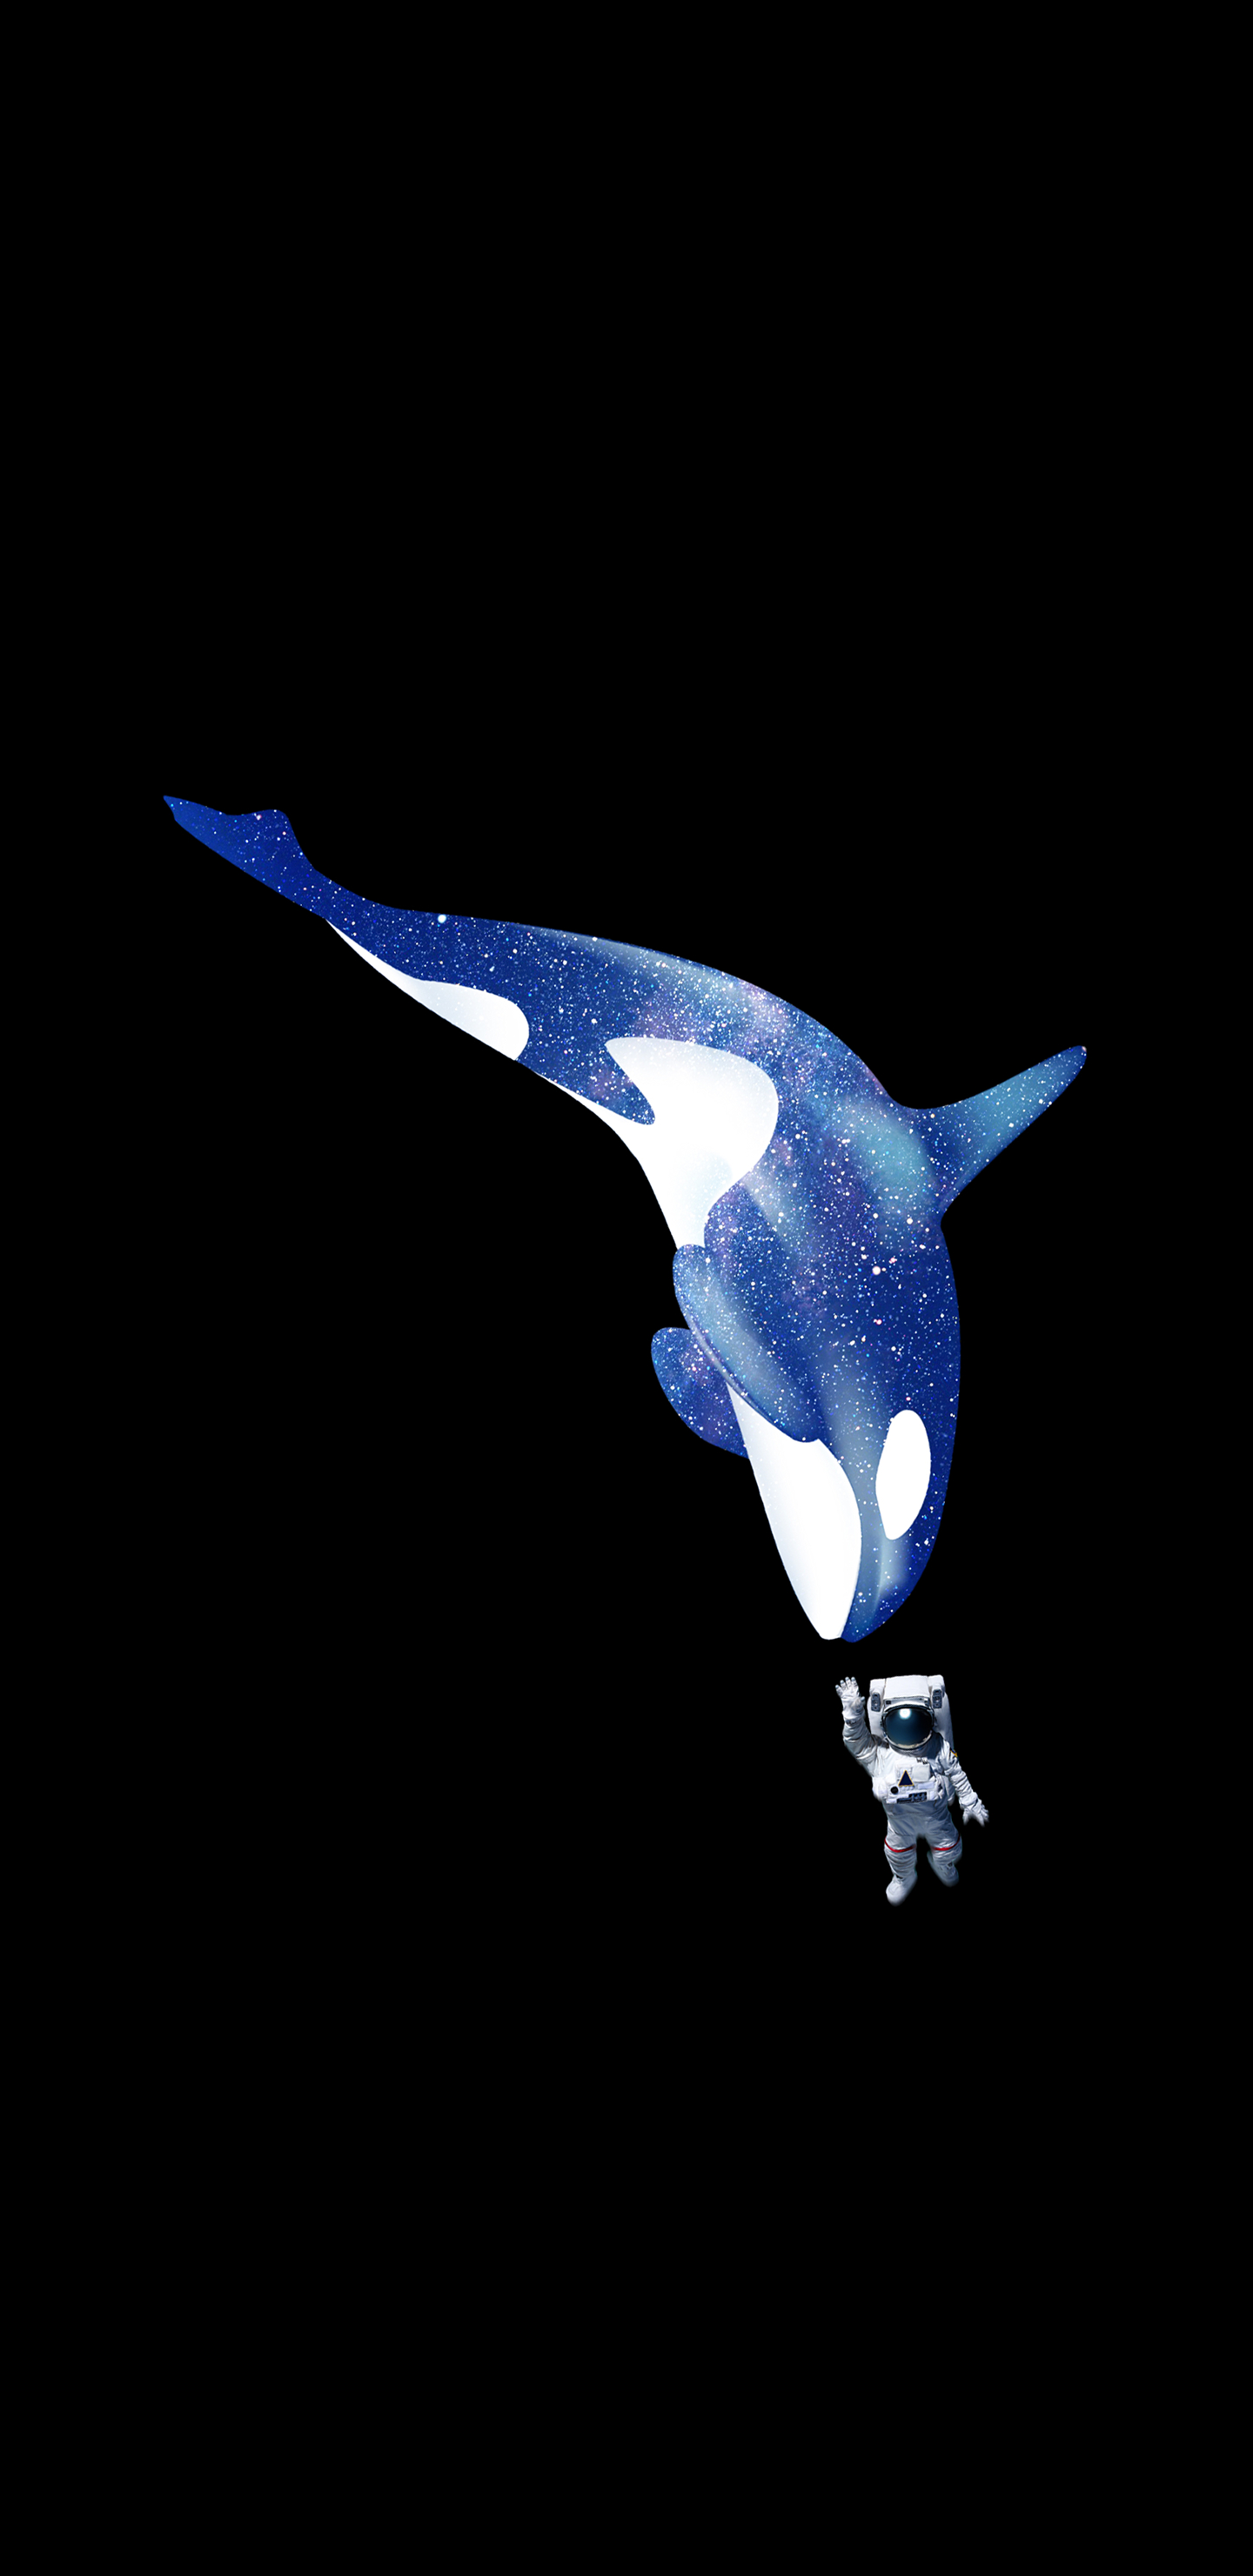 1440x2960 Orca and Astronaut | Iphone wallpaper whale, Orca art, Orca tatt